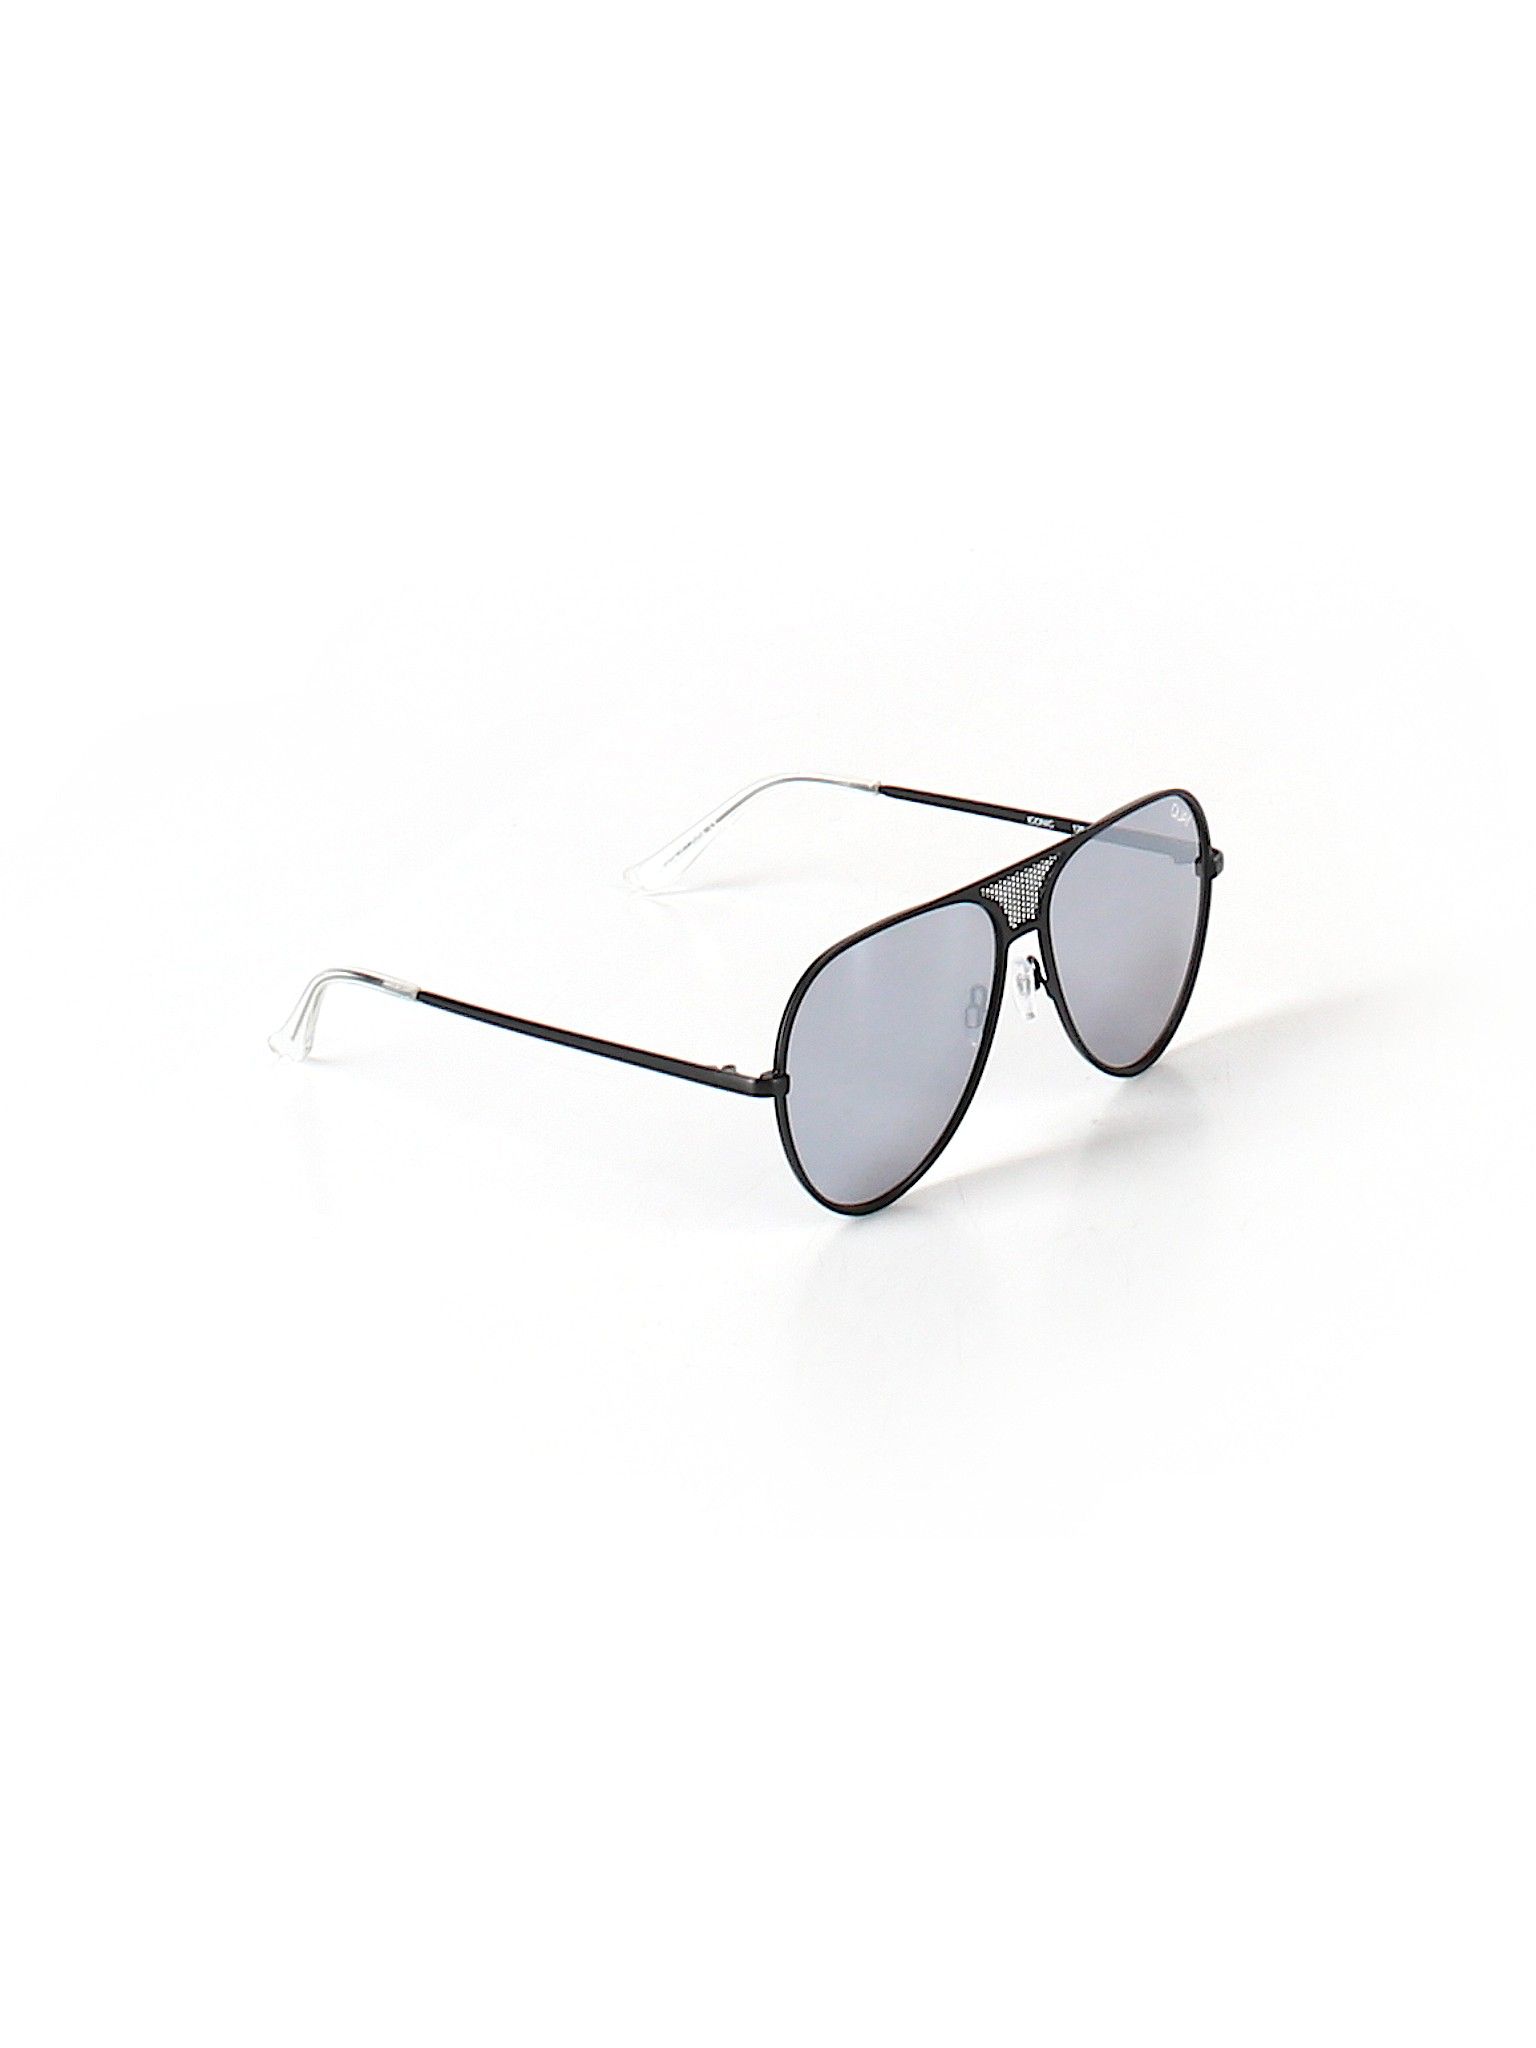 Quay Australia Sunglasses Size 00: Black Women's Accessories - 45346006 | thredUP